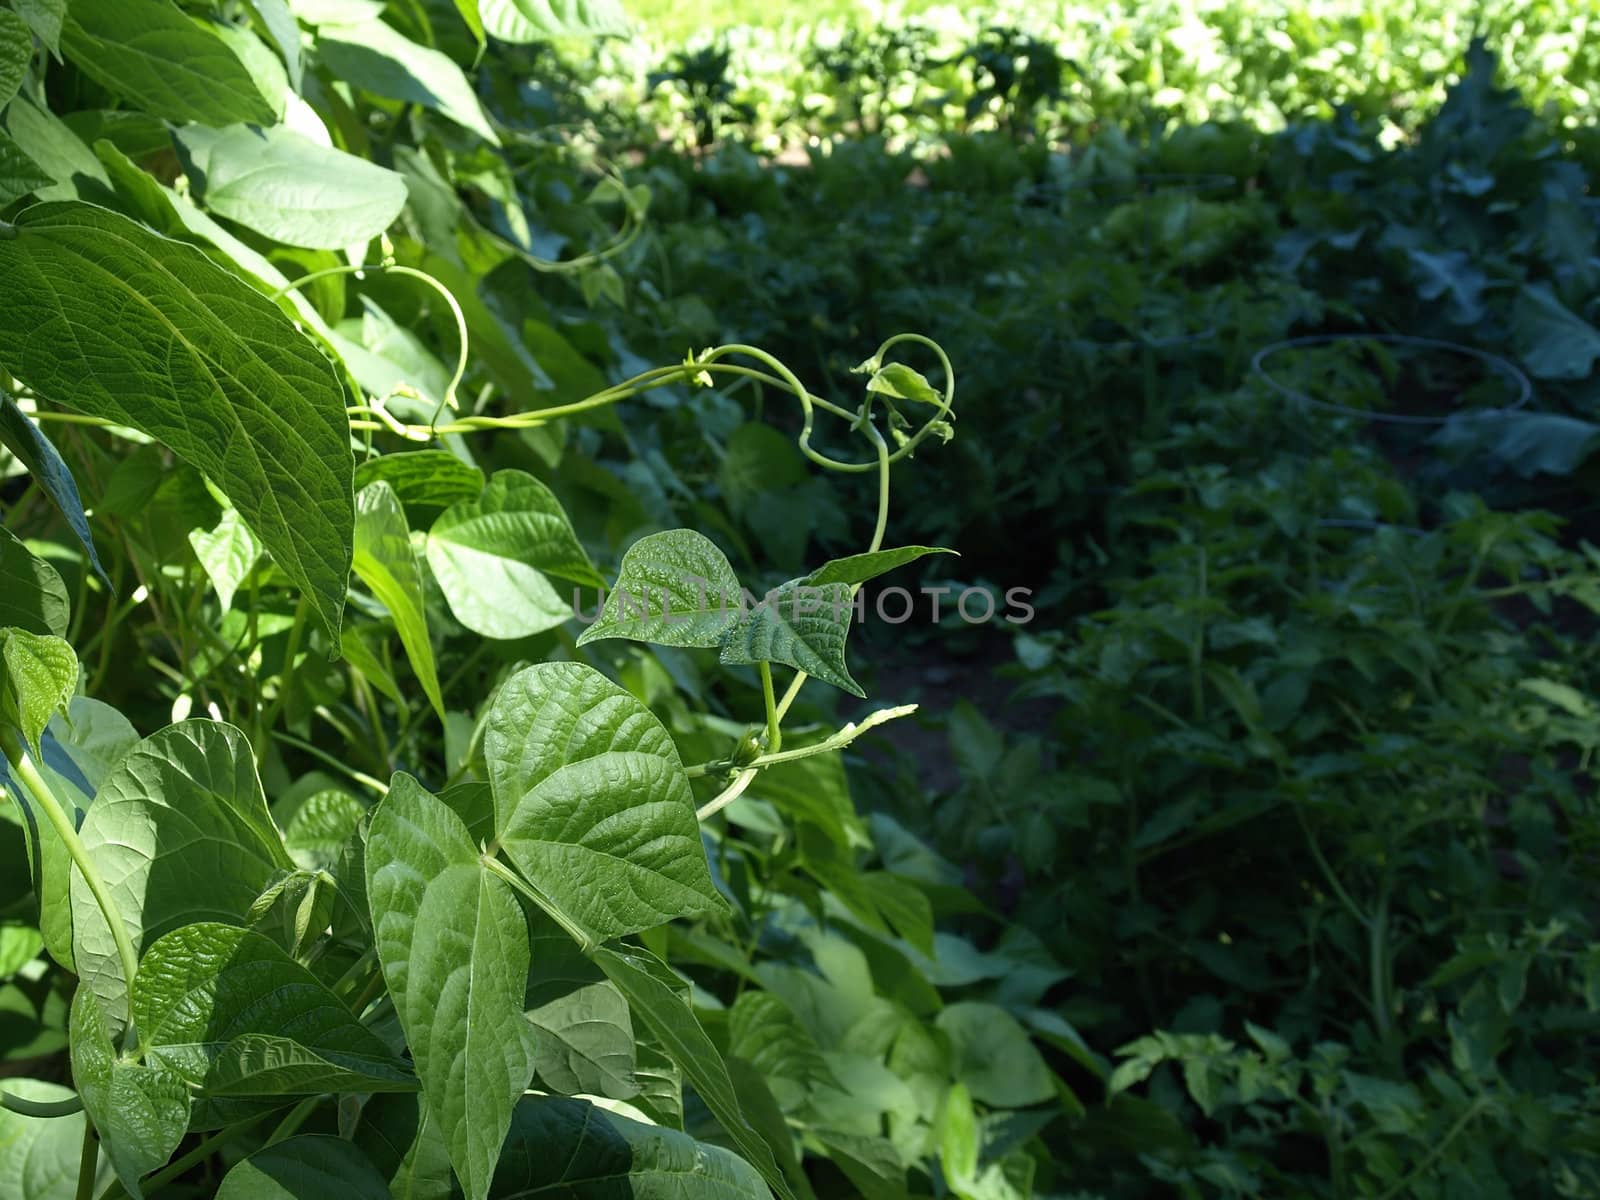 A wandering snap bean vine in a sea of green garden foliage.